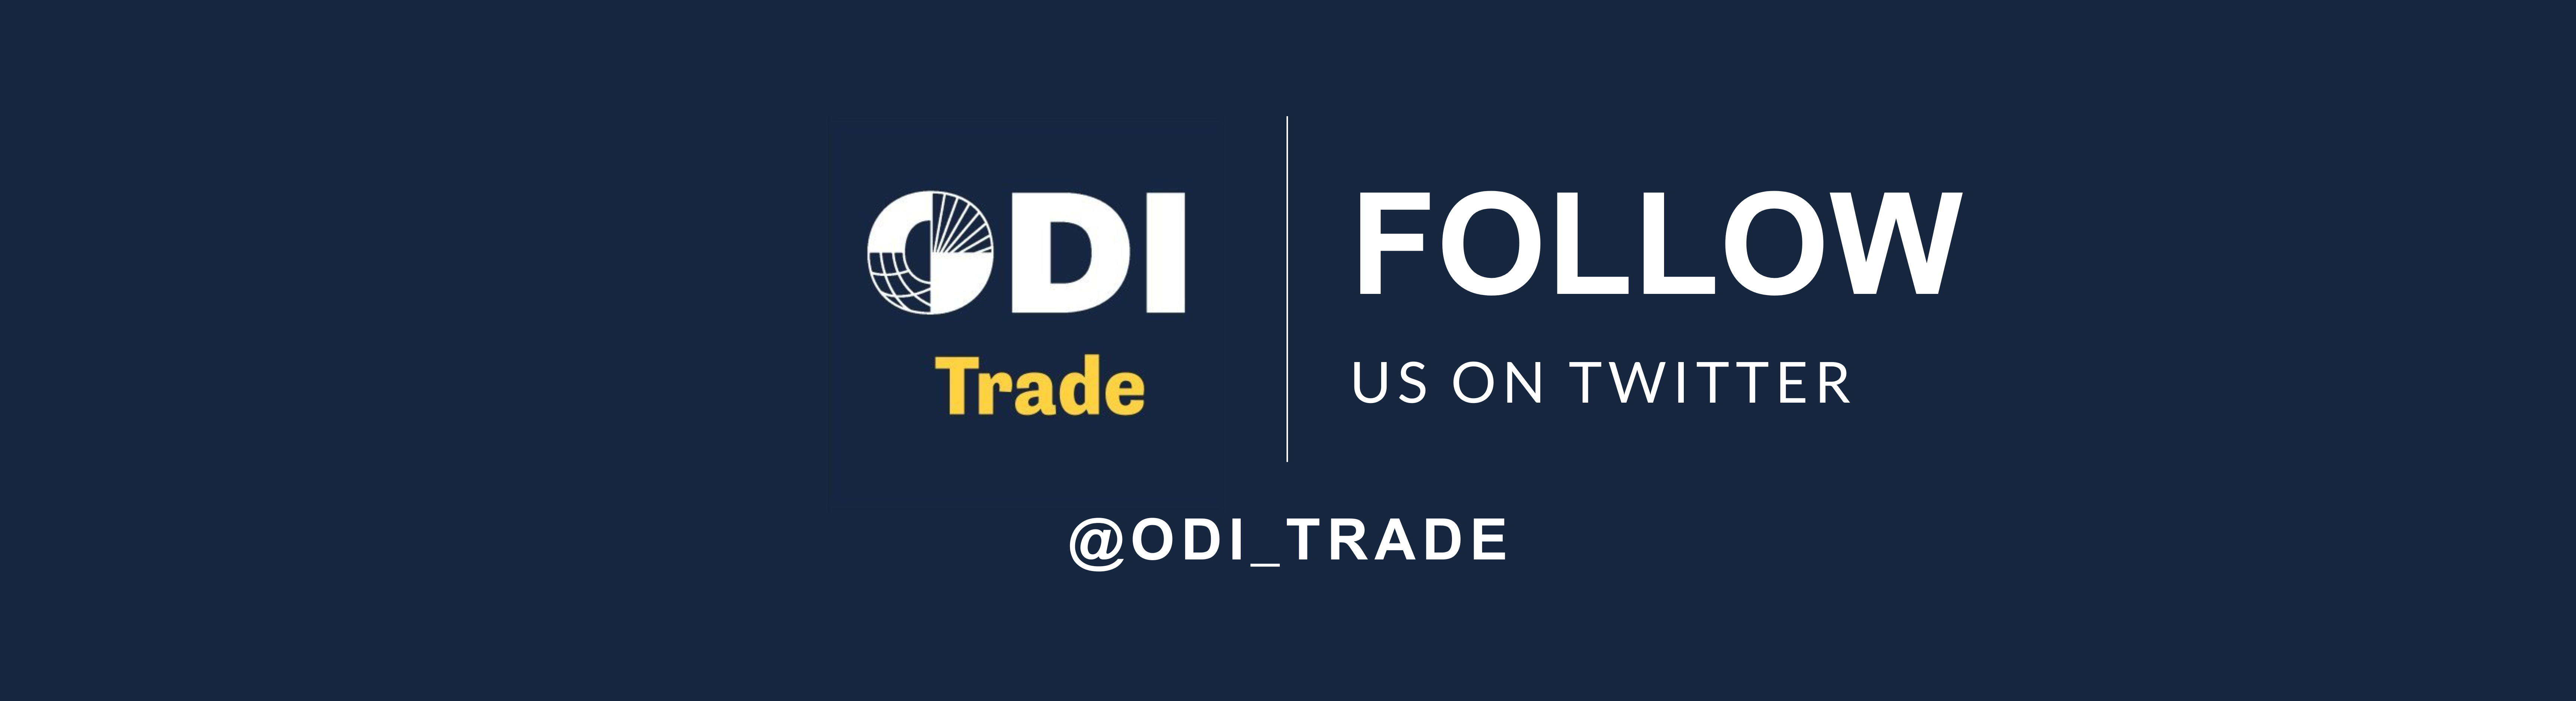 ODI Trade Twitter